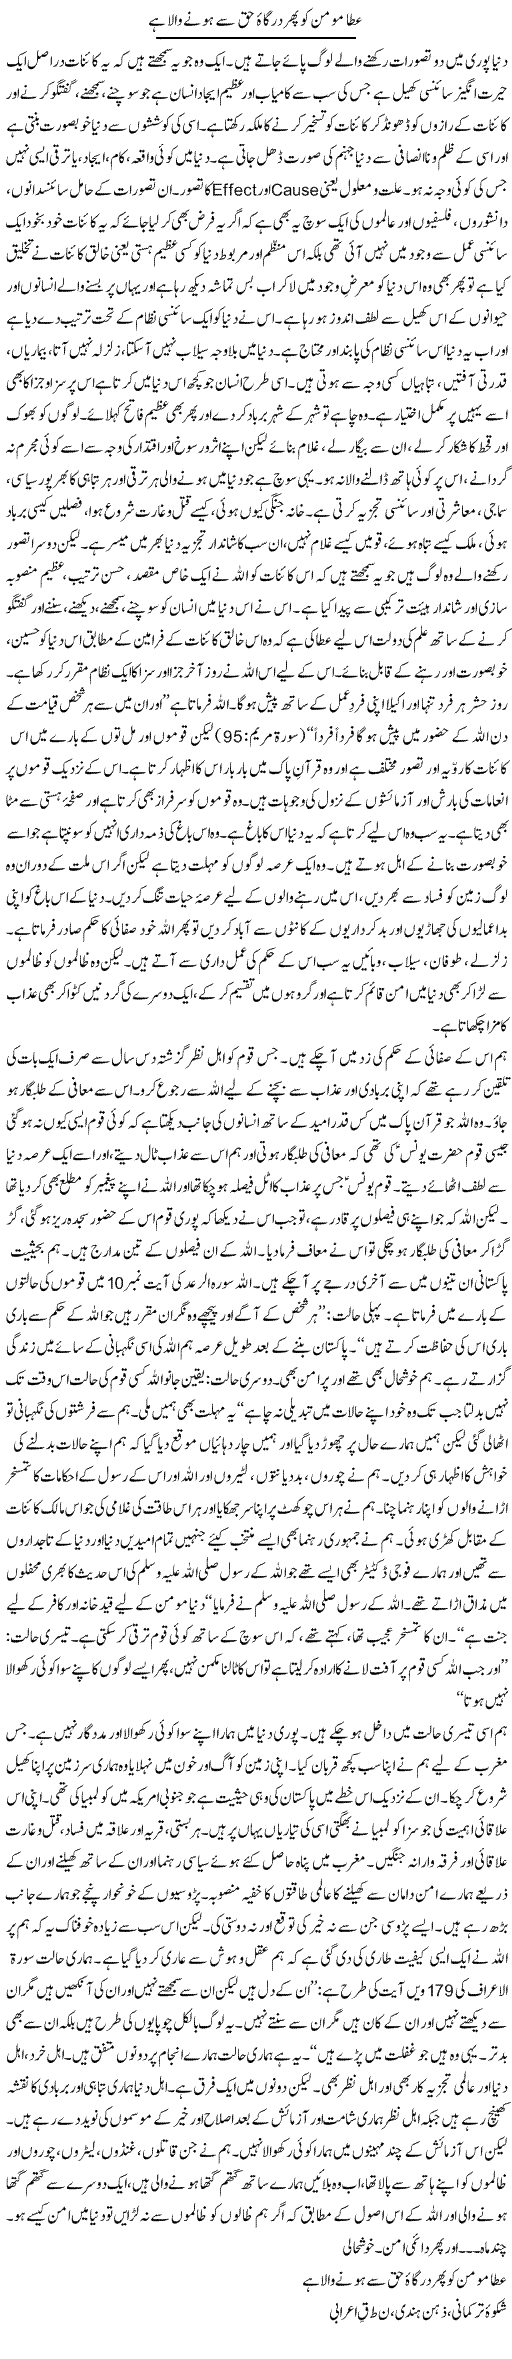 Atta Momin Ko Phir Dargah Haq Say Hone Wala Hai | Orya Maqbool Jan | Daily Urdu Columns